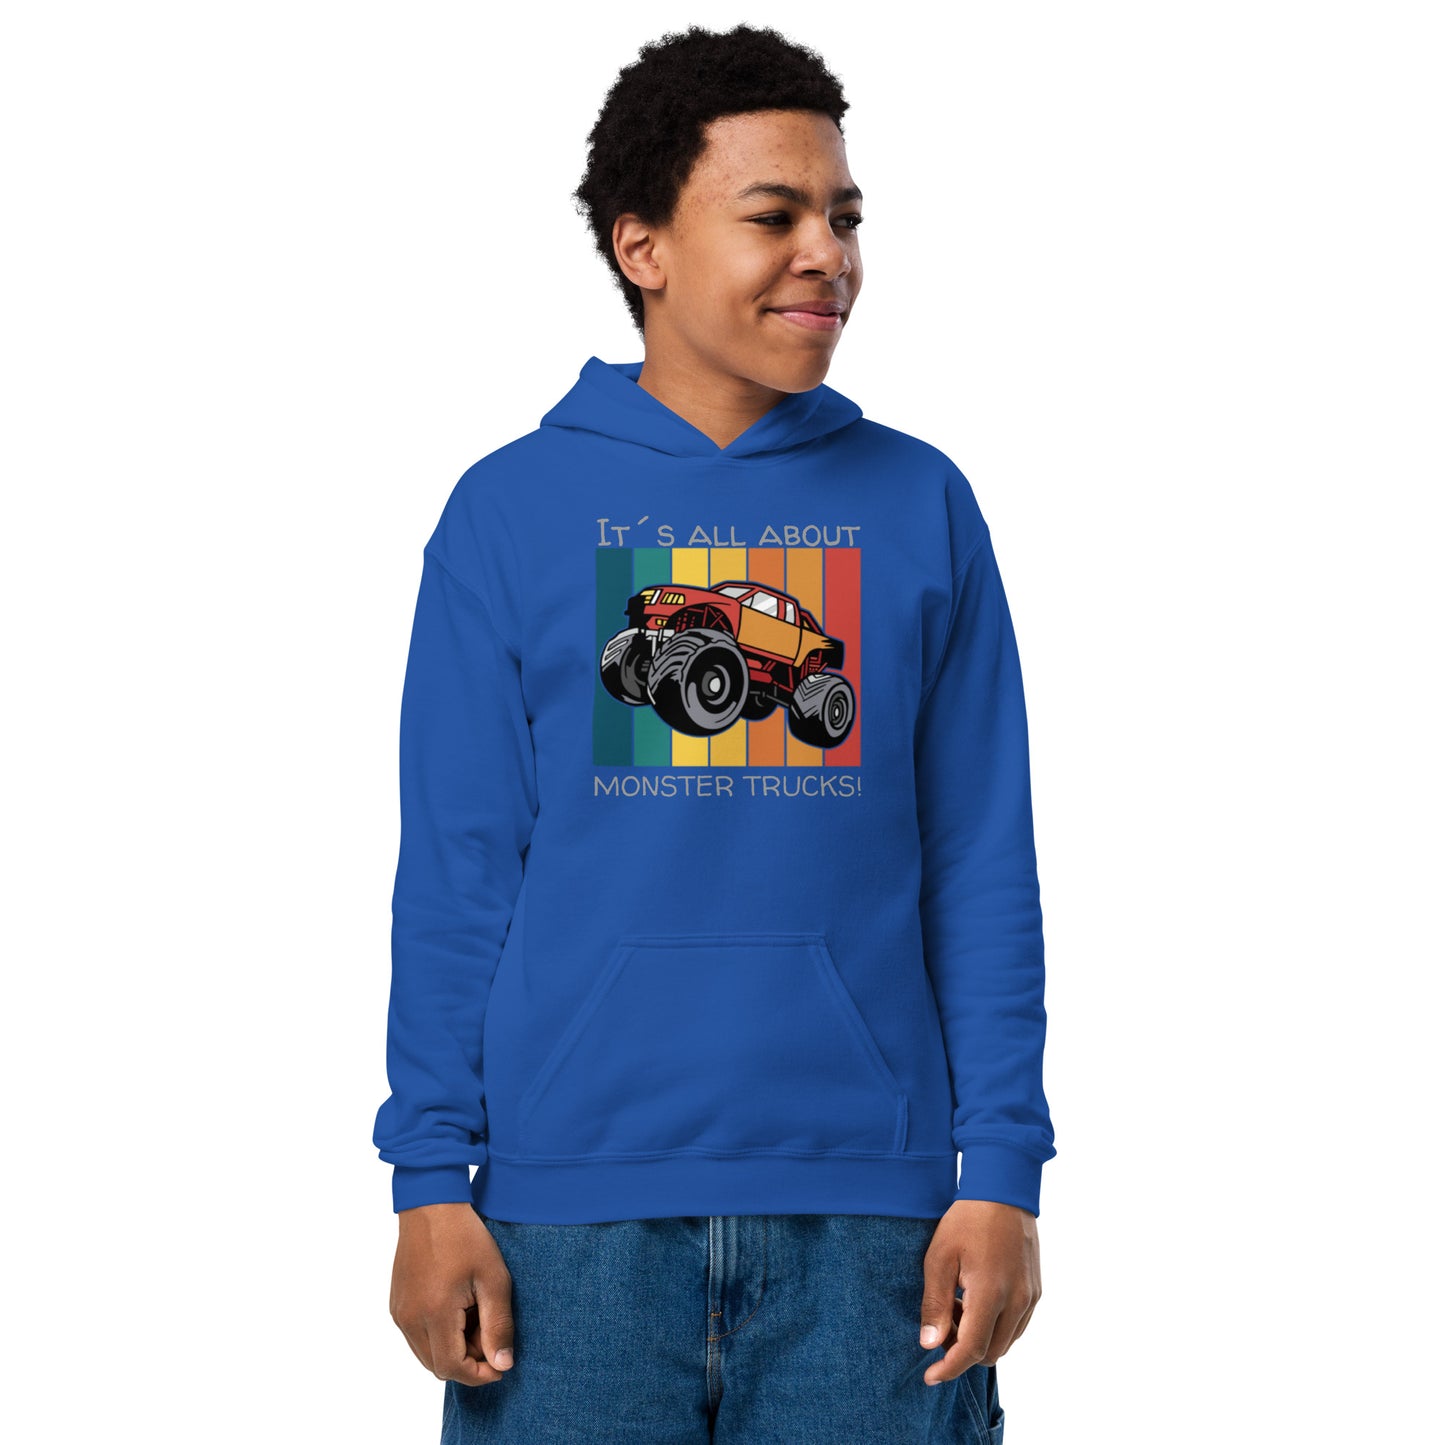 "Monster Trucks" children's hoodie